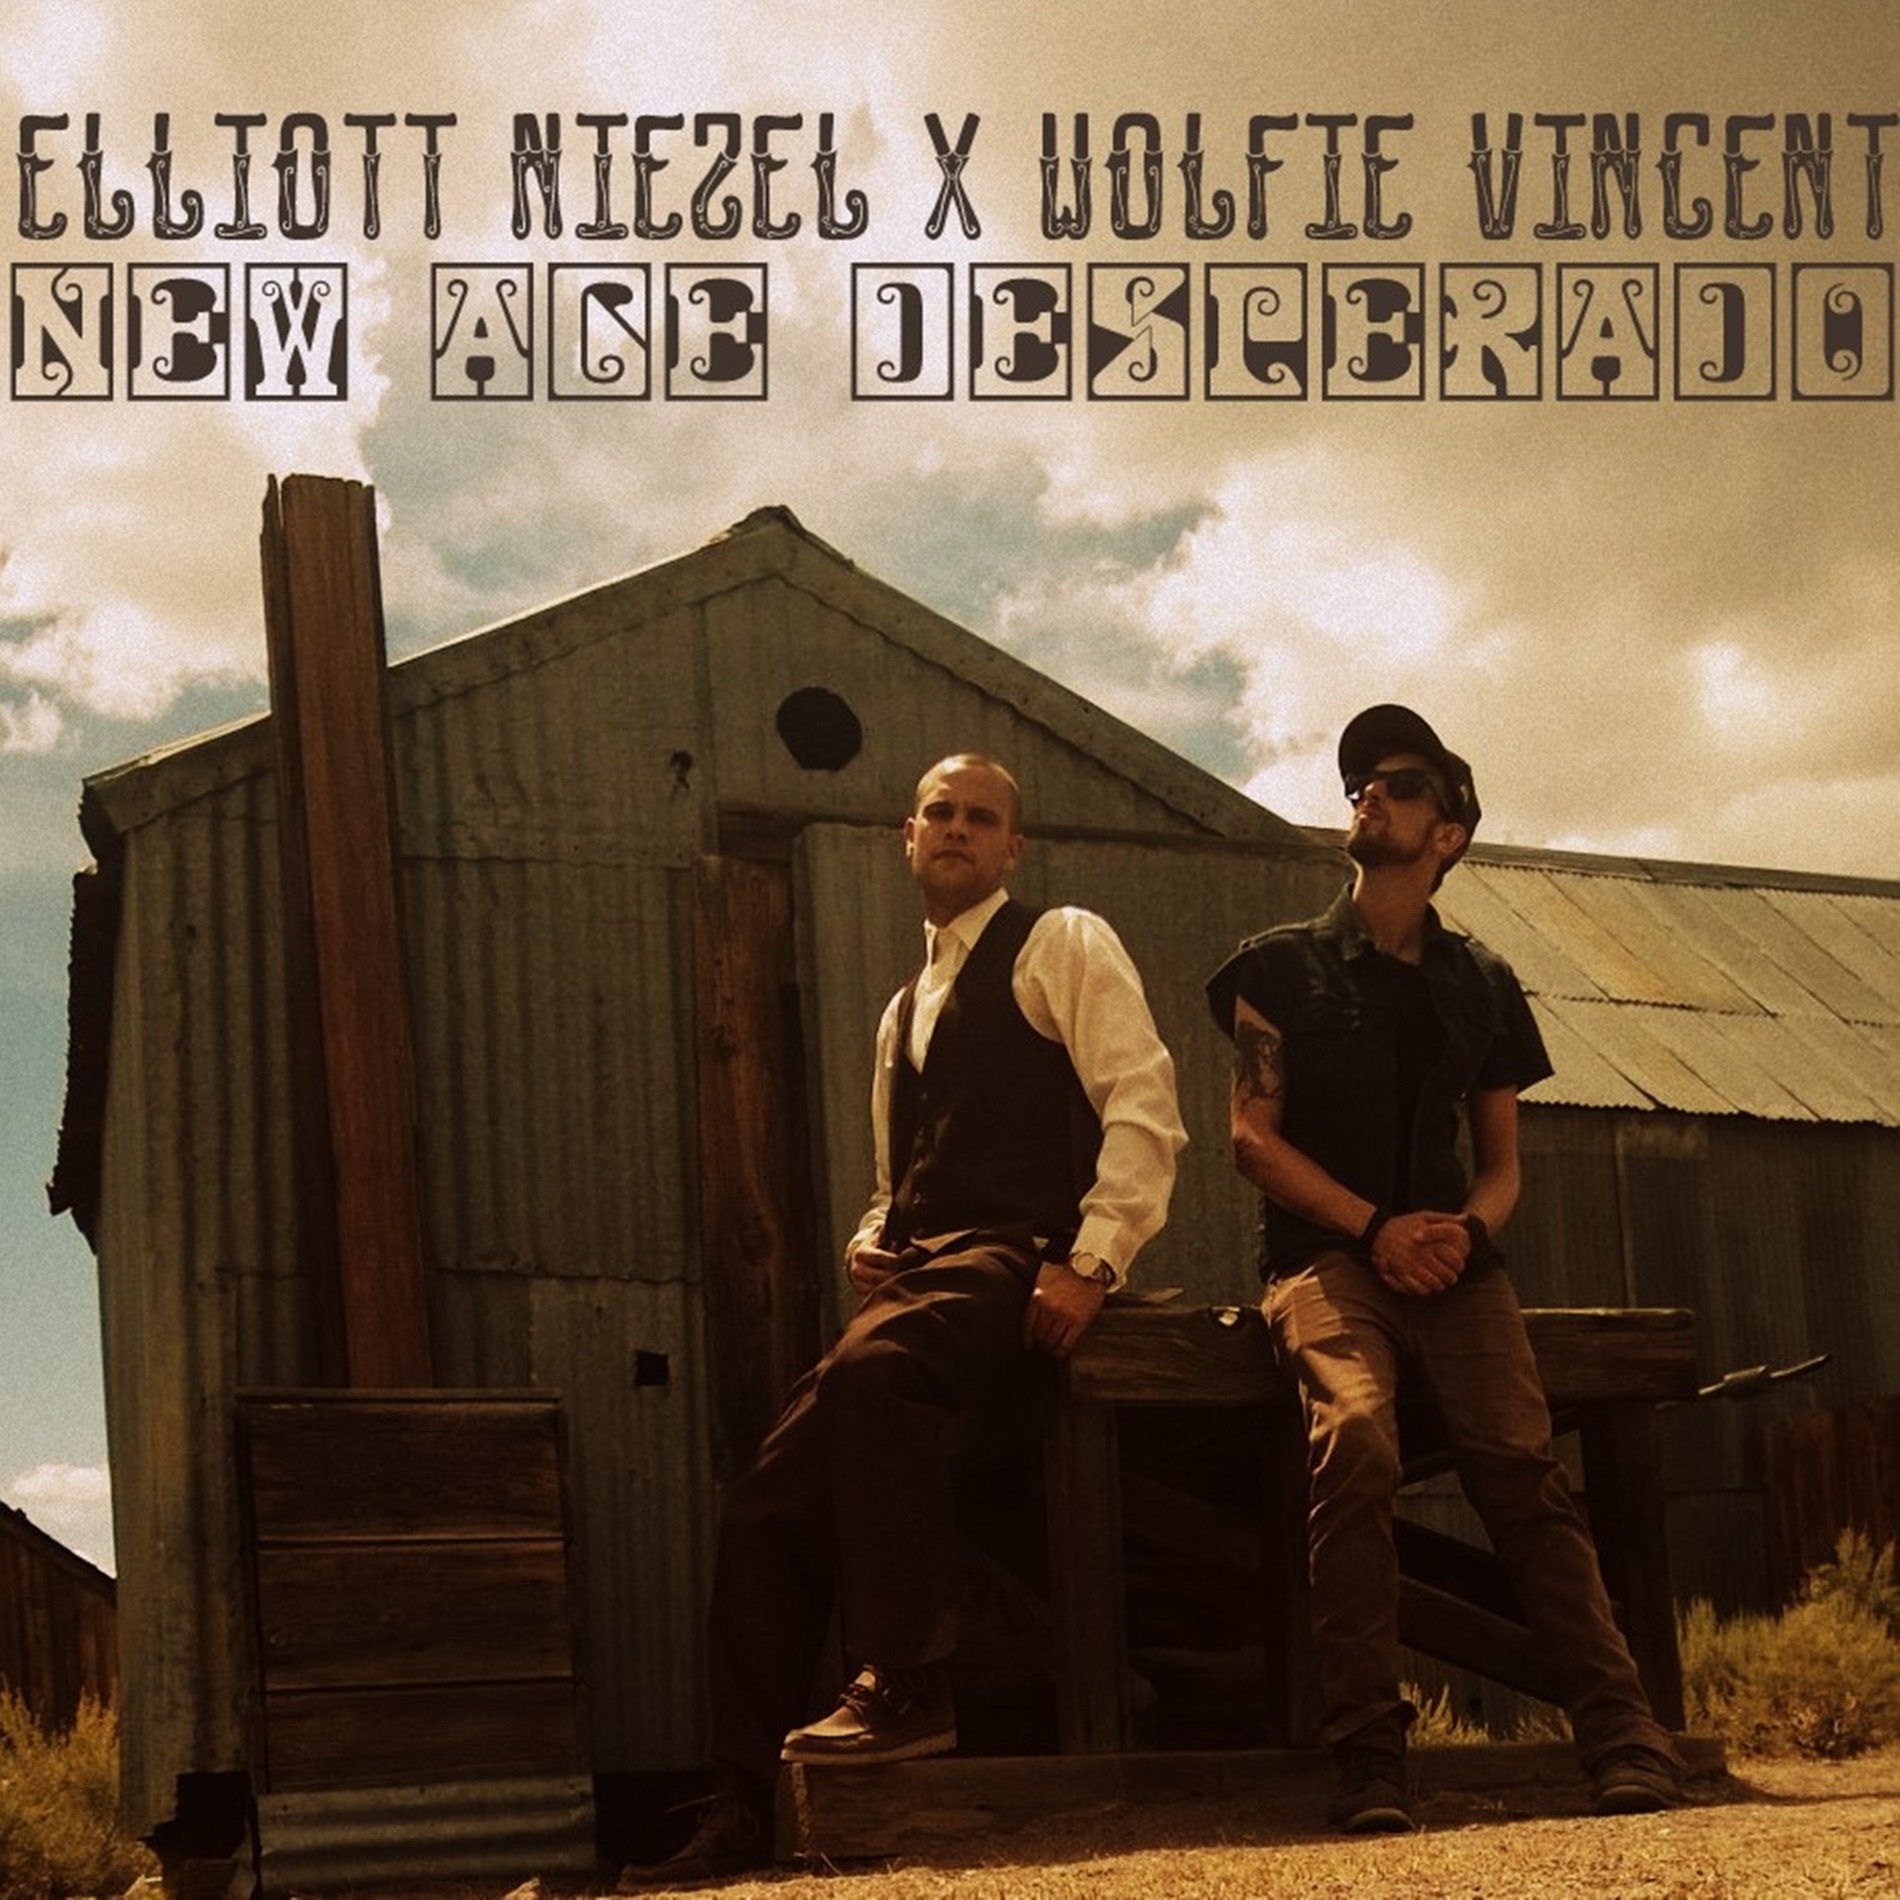 Watch Elliott Niezel’s New Age Desperado Visual Album